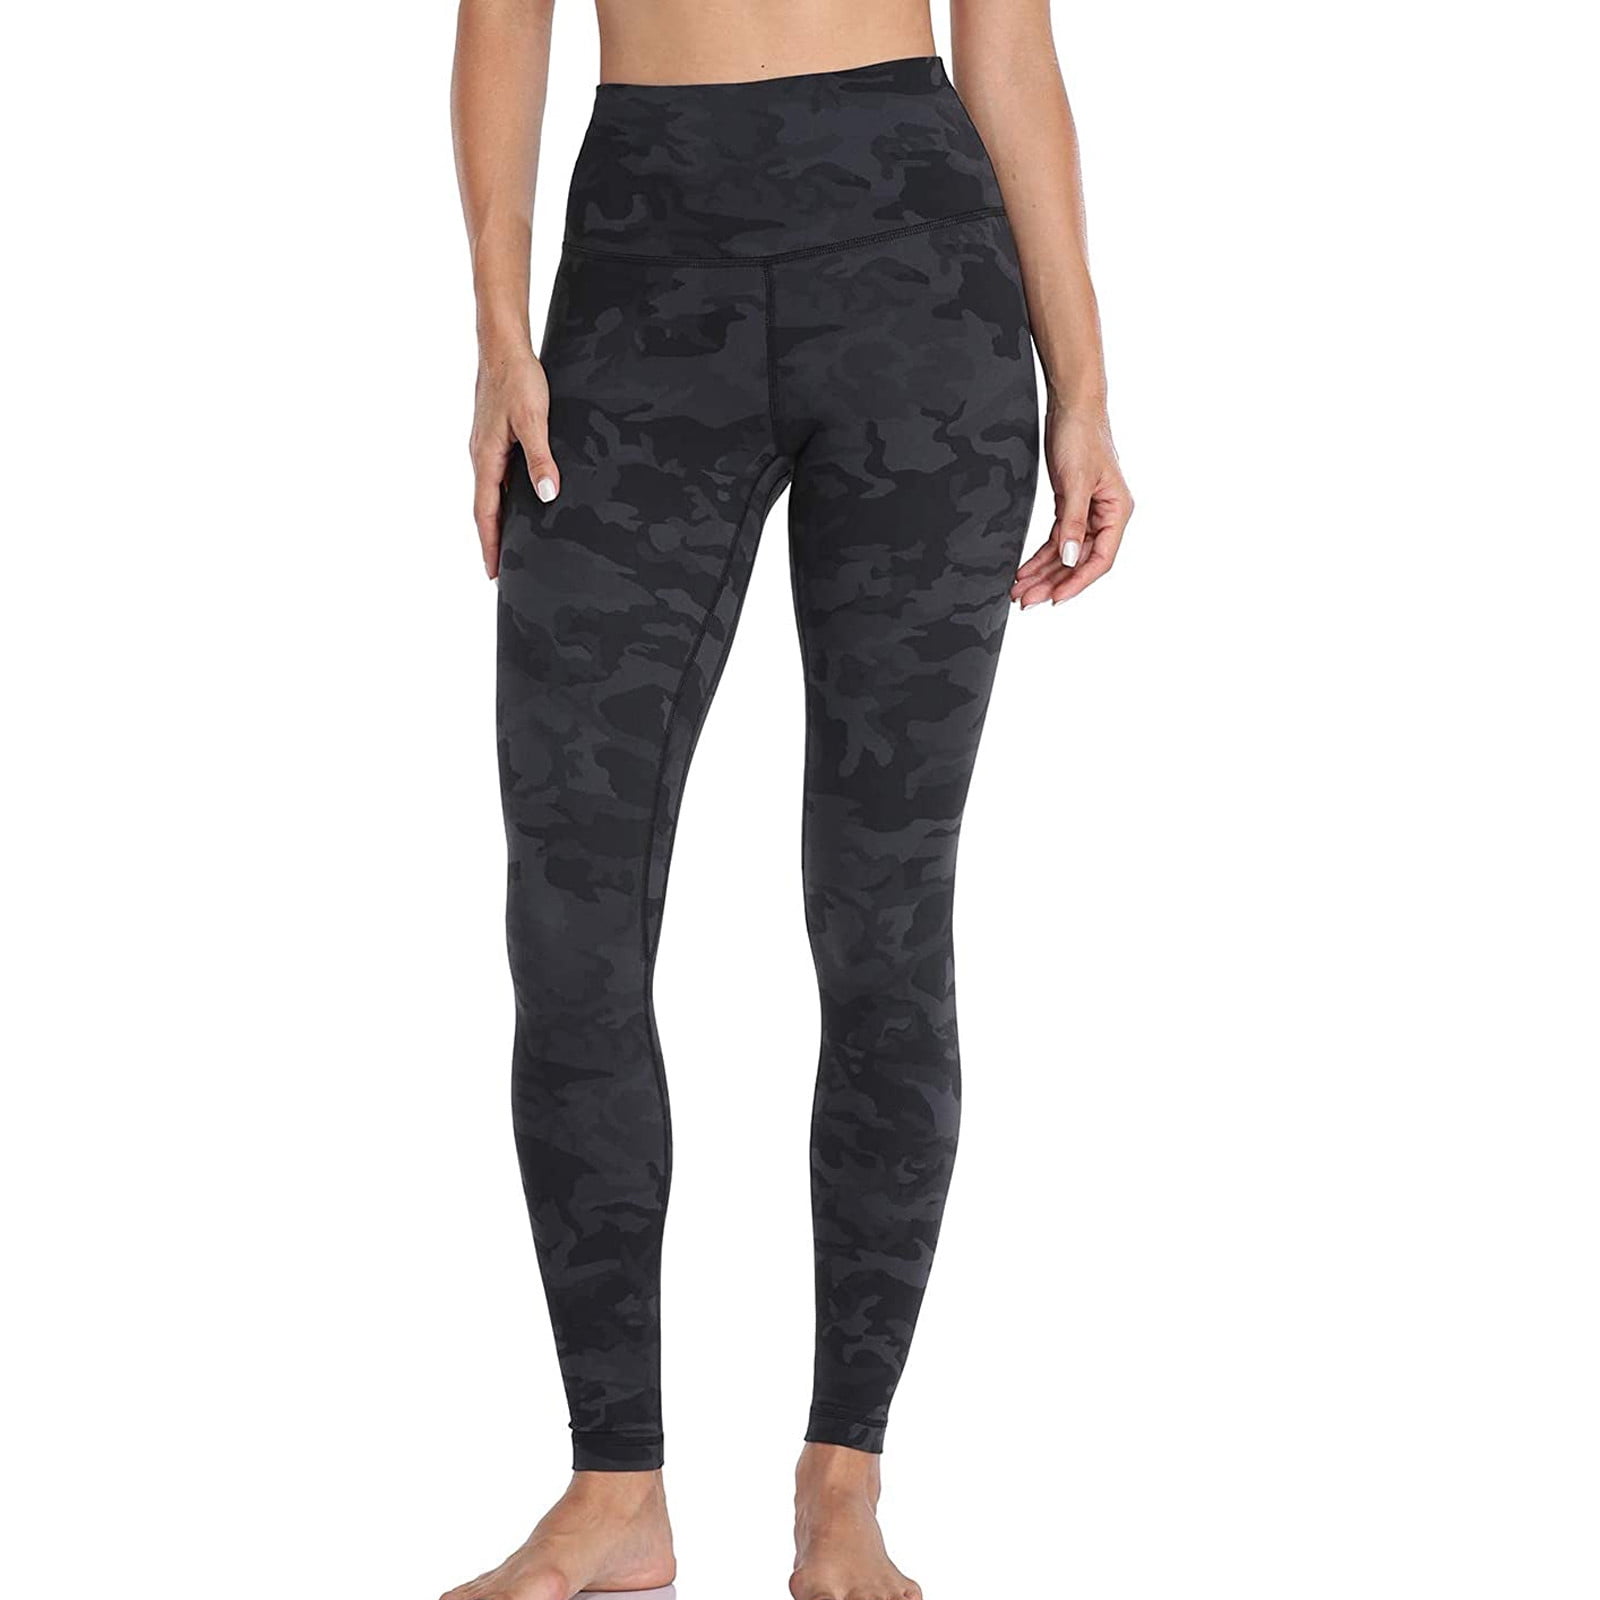 JWZUY Womens Camo Print Leggings Yoga Workout Ankle Length Elastic High  Waist Pant Slim Fit Casual Pants Gray XS 